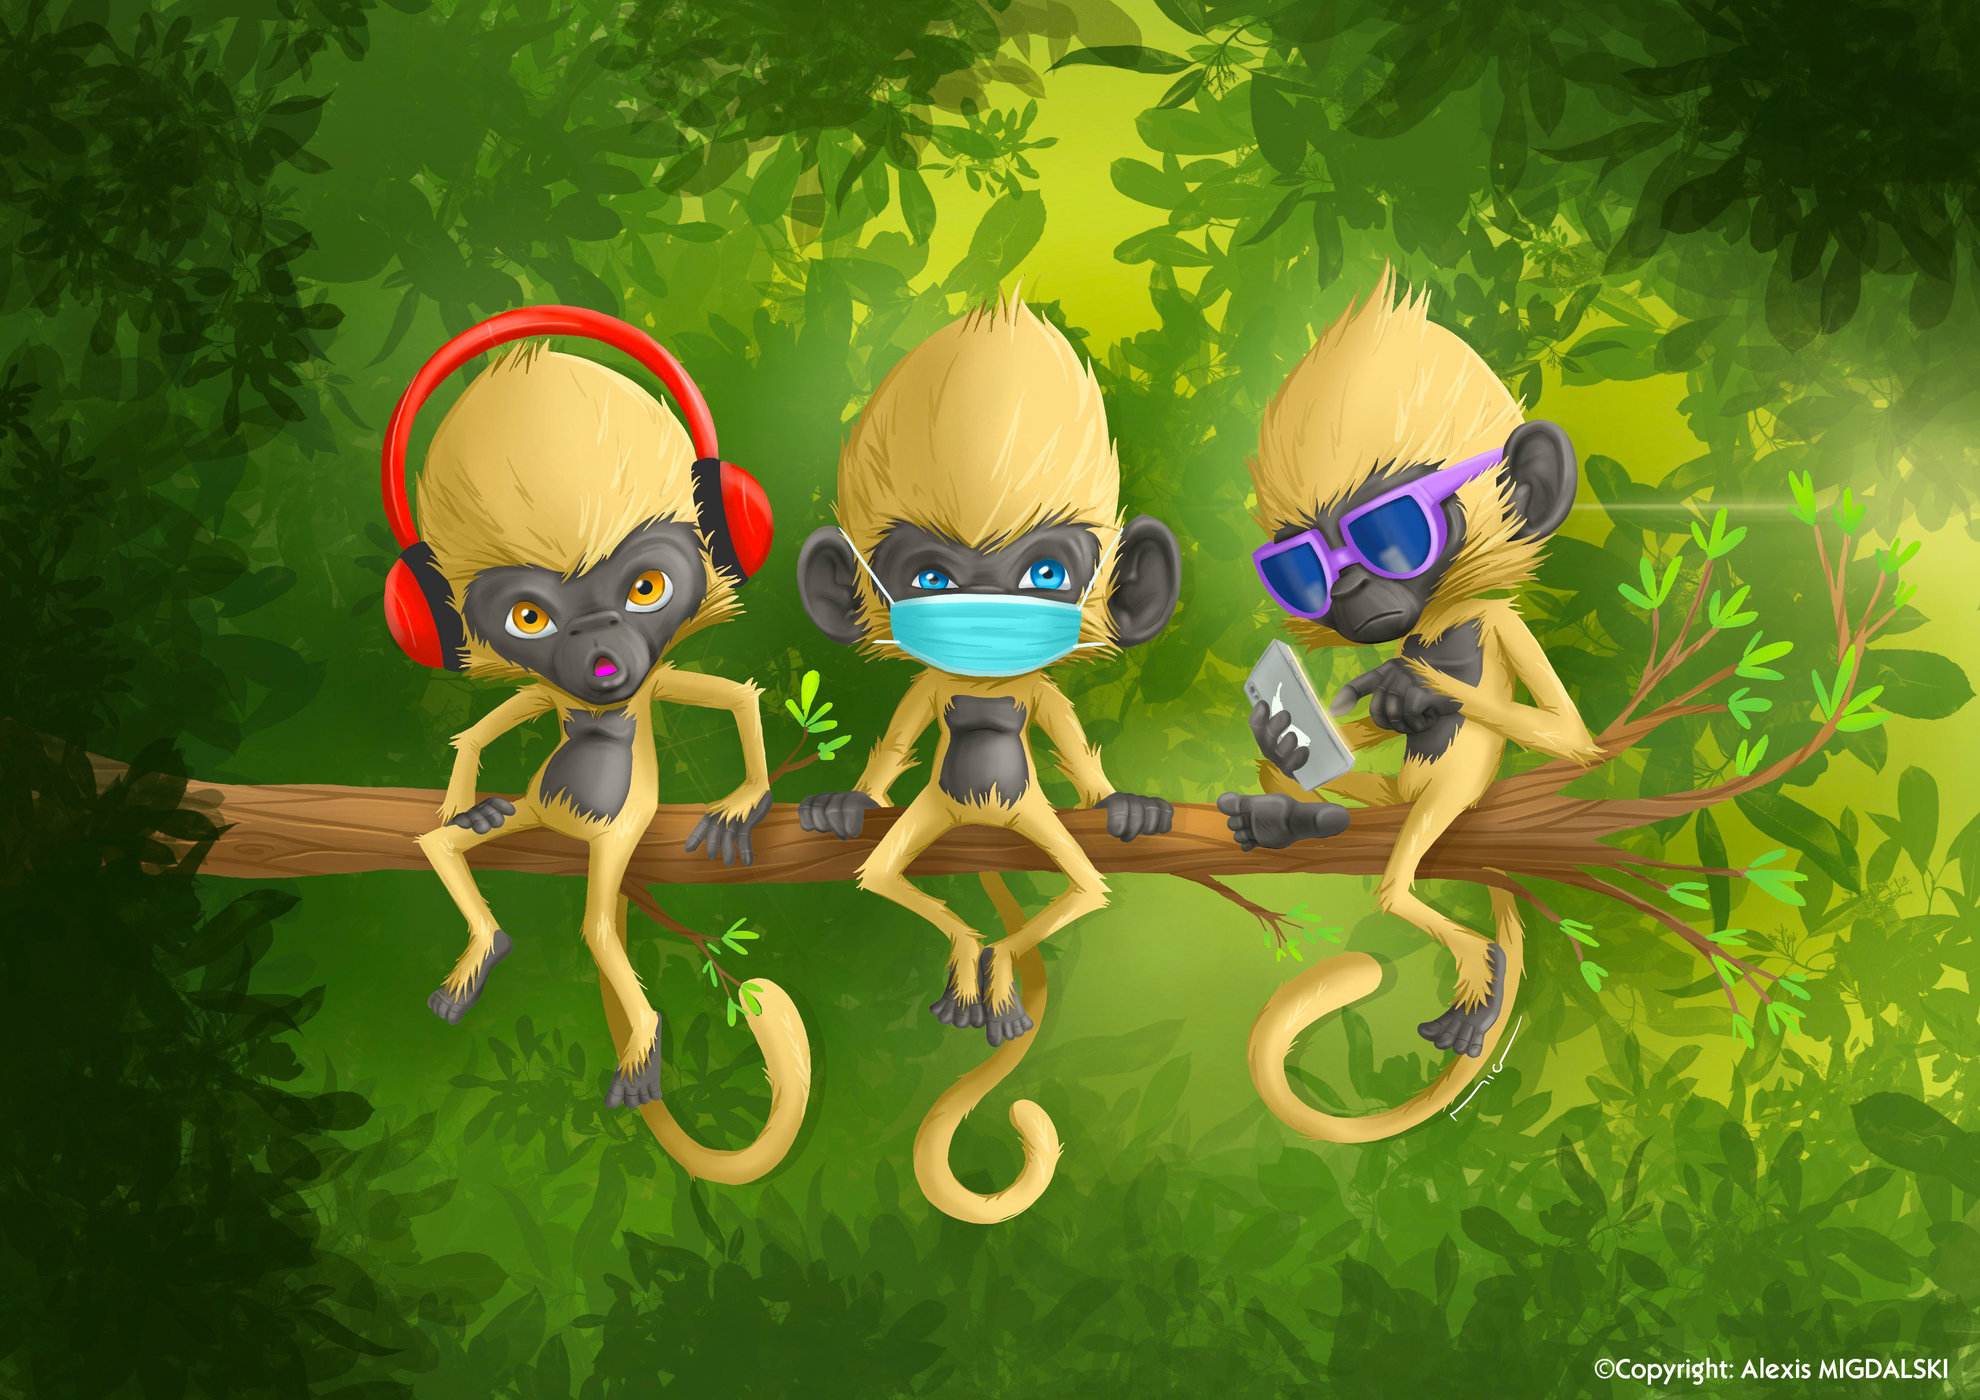 3 monkeys - Alexis Migdalski